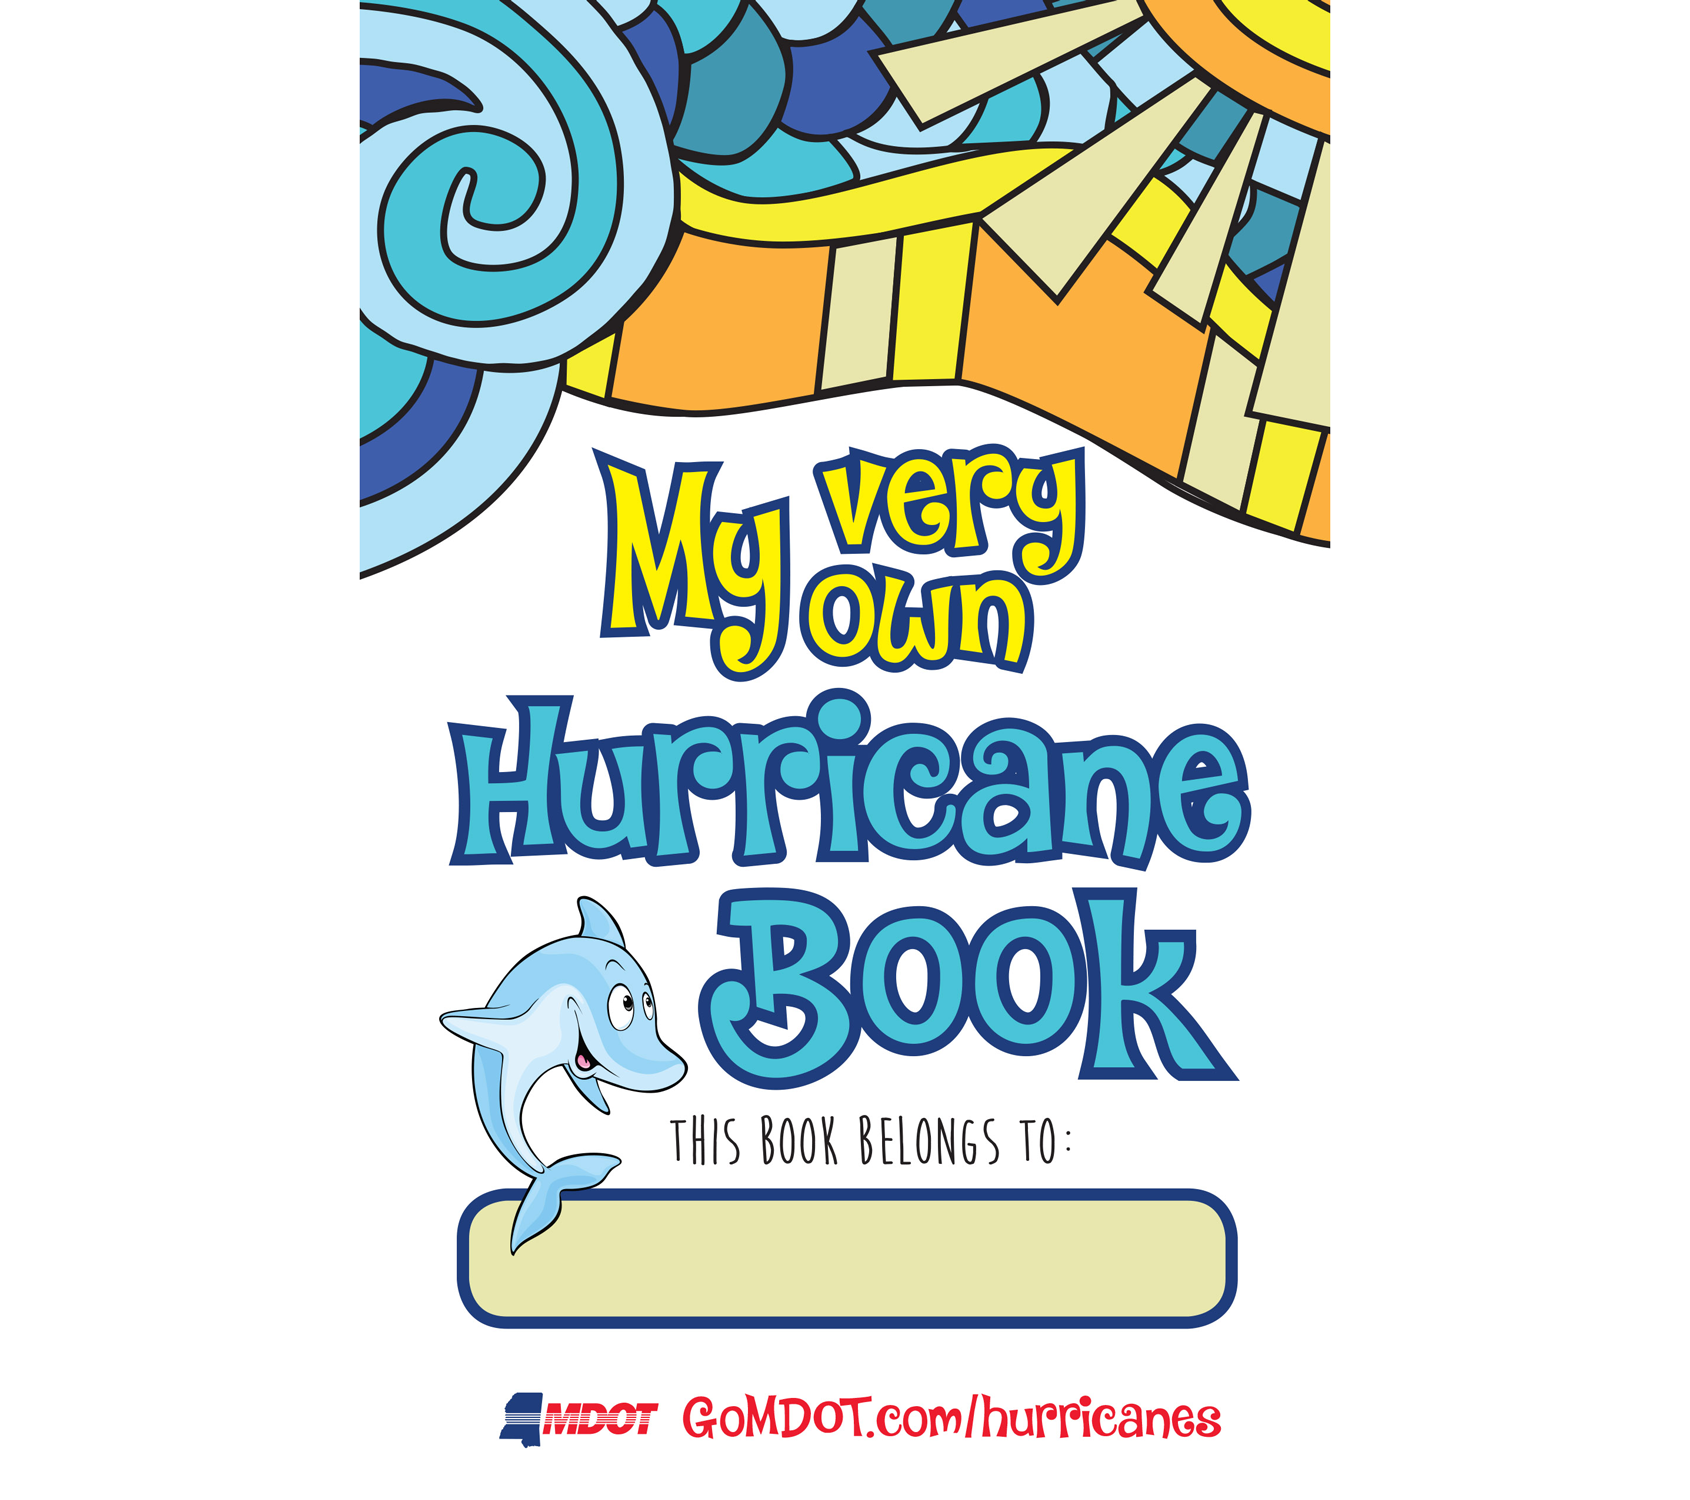 My Very Own Hurricane Book